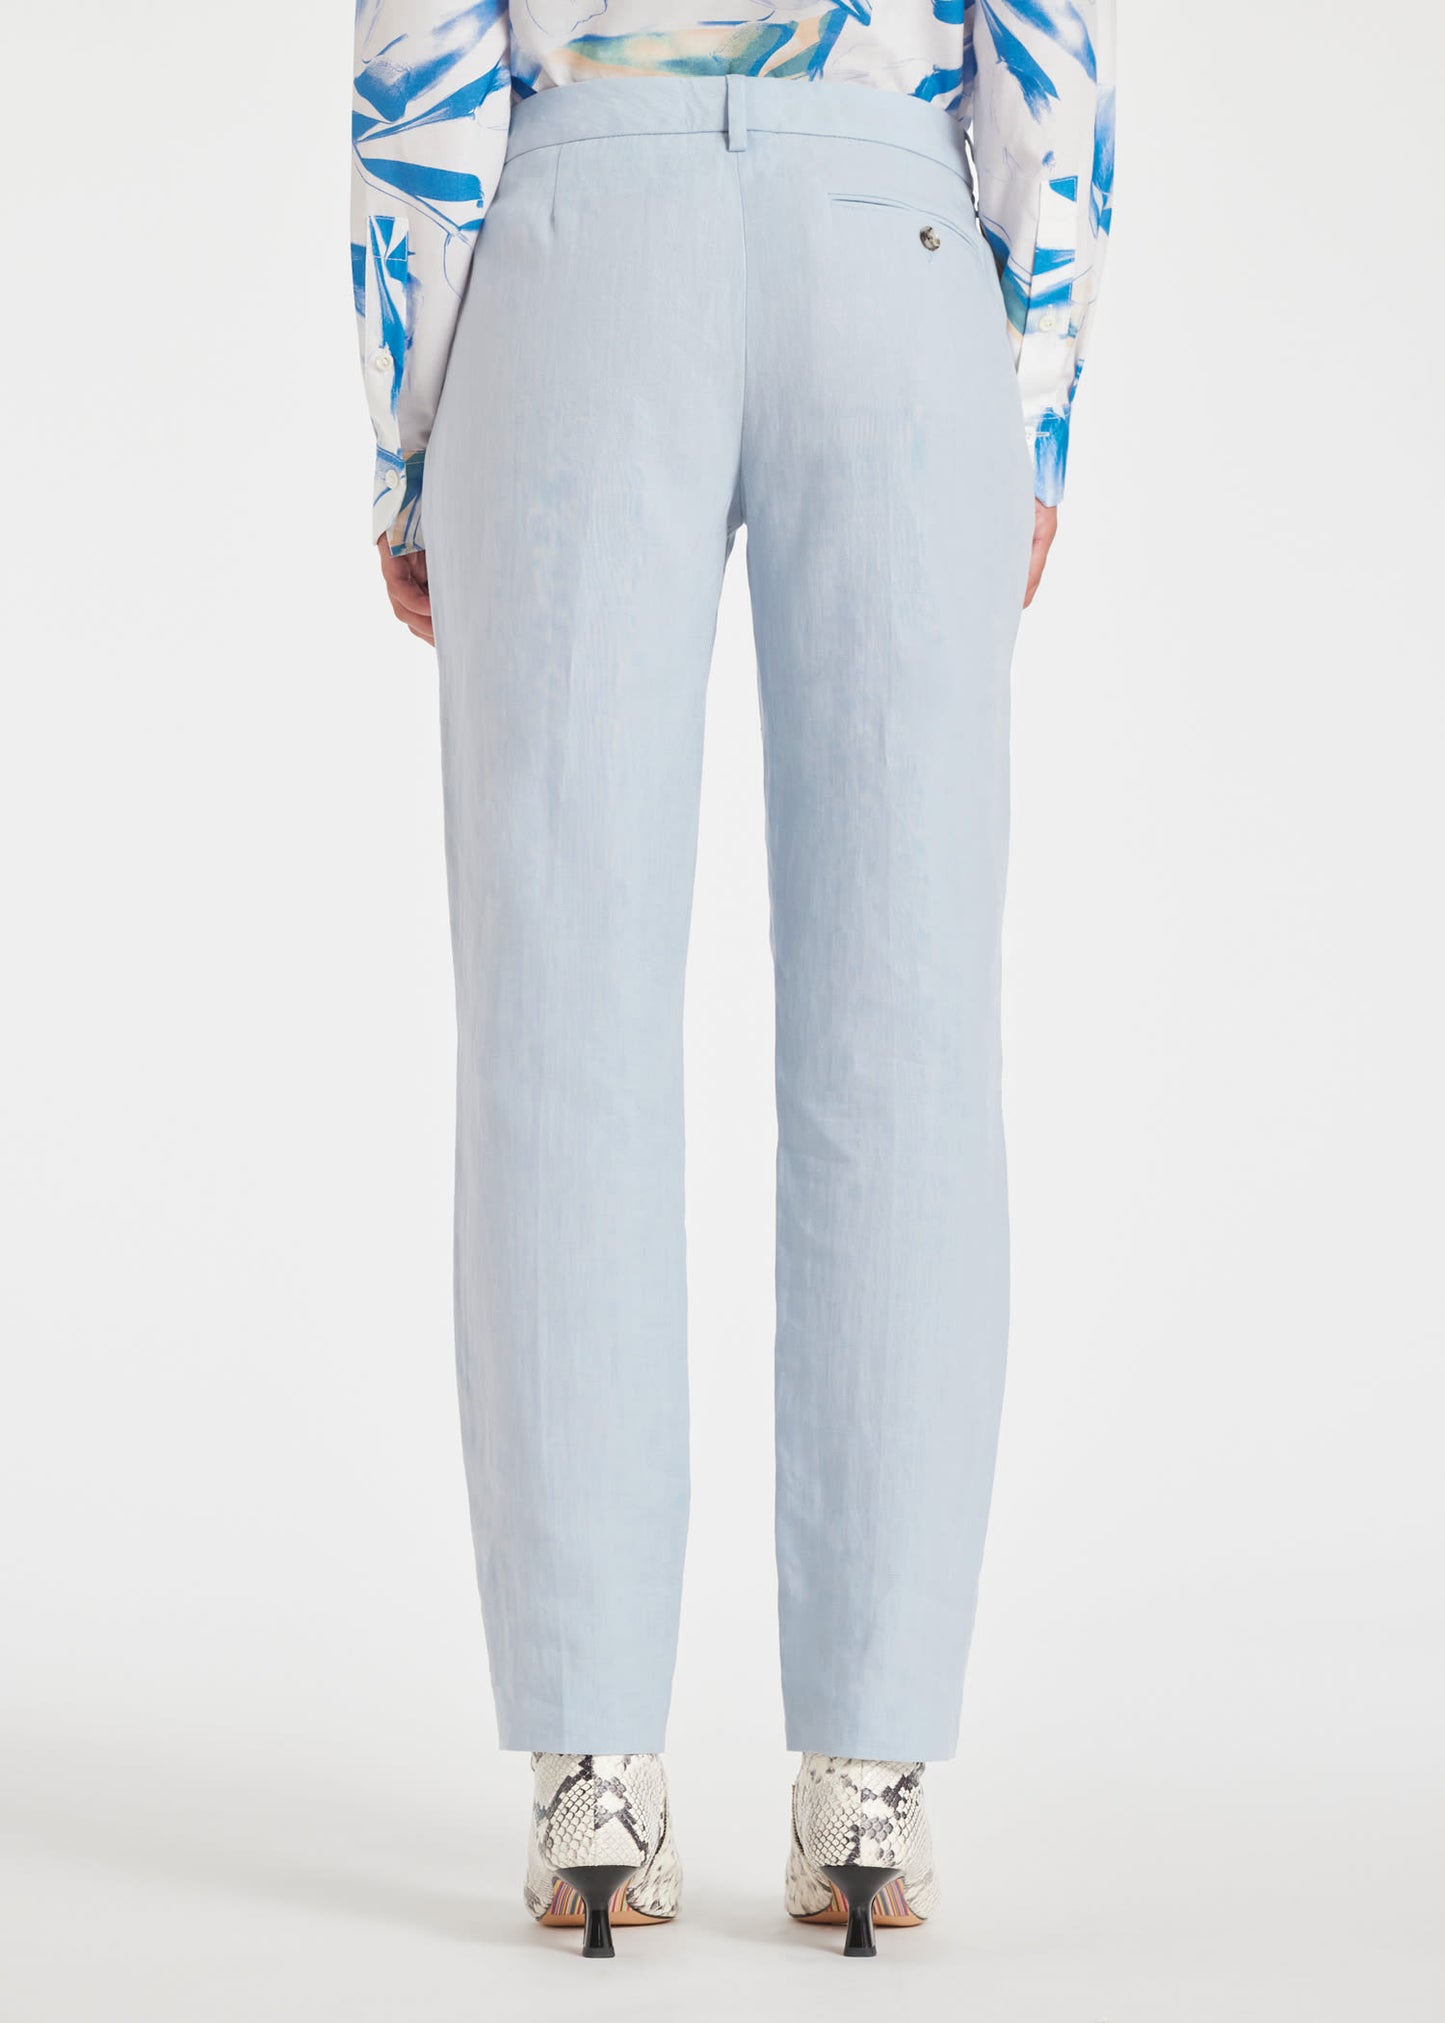 PAUL SMITH | Pantalon en lin - Bleu pâle